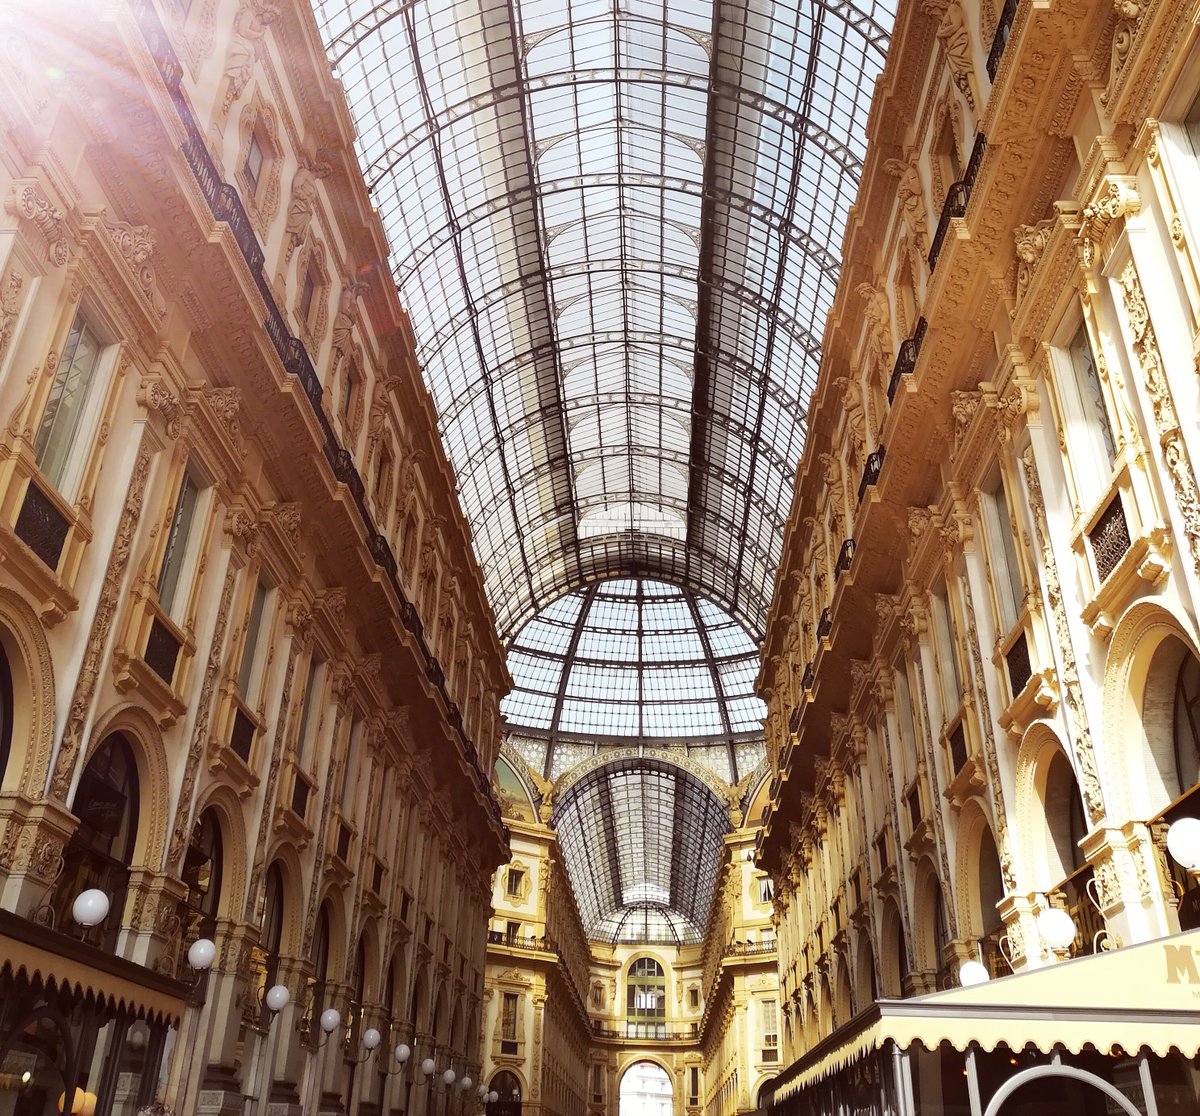 Start a new week enjoying the stunning architecture of Milan’s oldest shopping mall, the ‘Galleria’. 
#italia #milano #milan #piazzaduomo #duomo #galleriavittorioemanuele #architecture #archilovers #bellamilano #instamilano #urbanlife #urban #view #citylife  #италия #милан